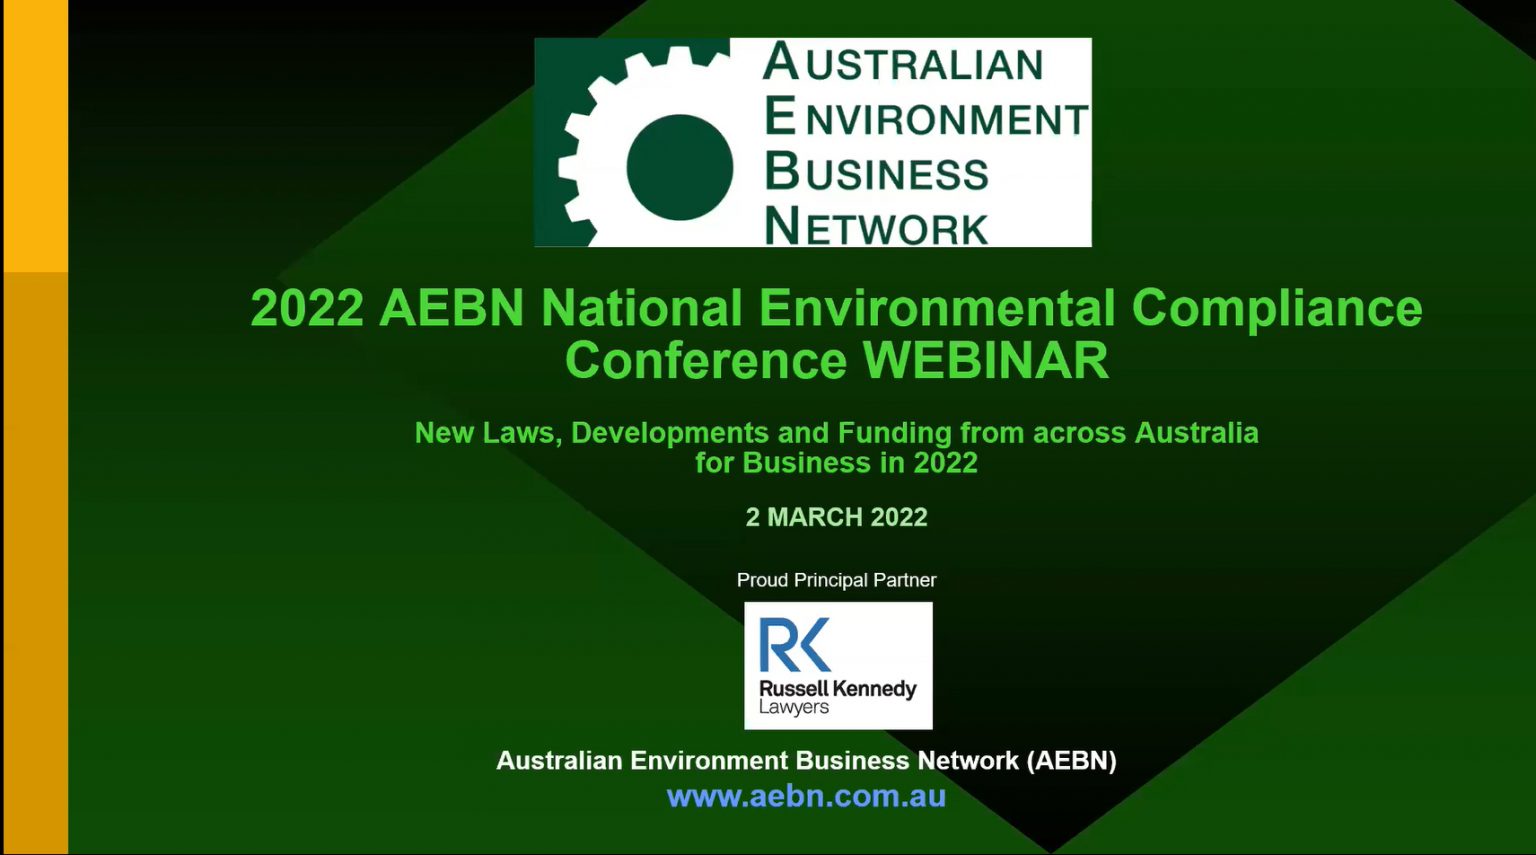 Webinar 2022 AEBN National Environmental Compliance Conference